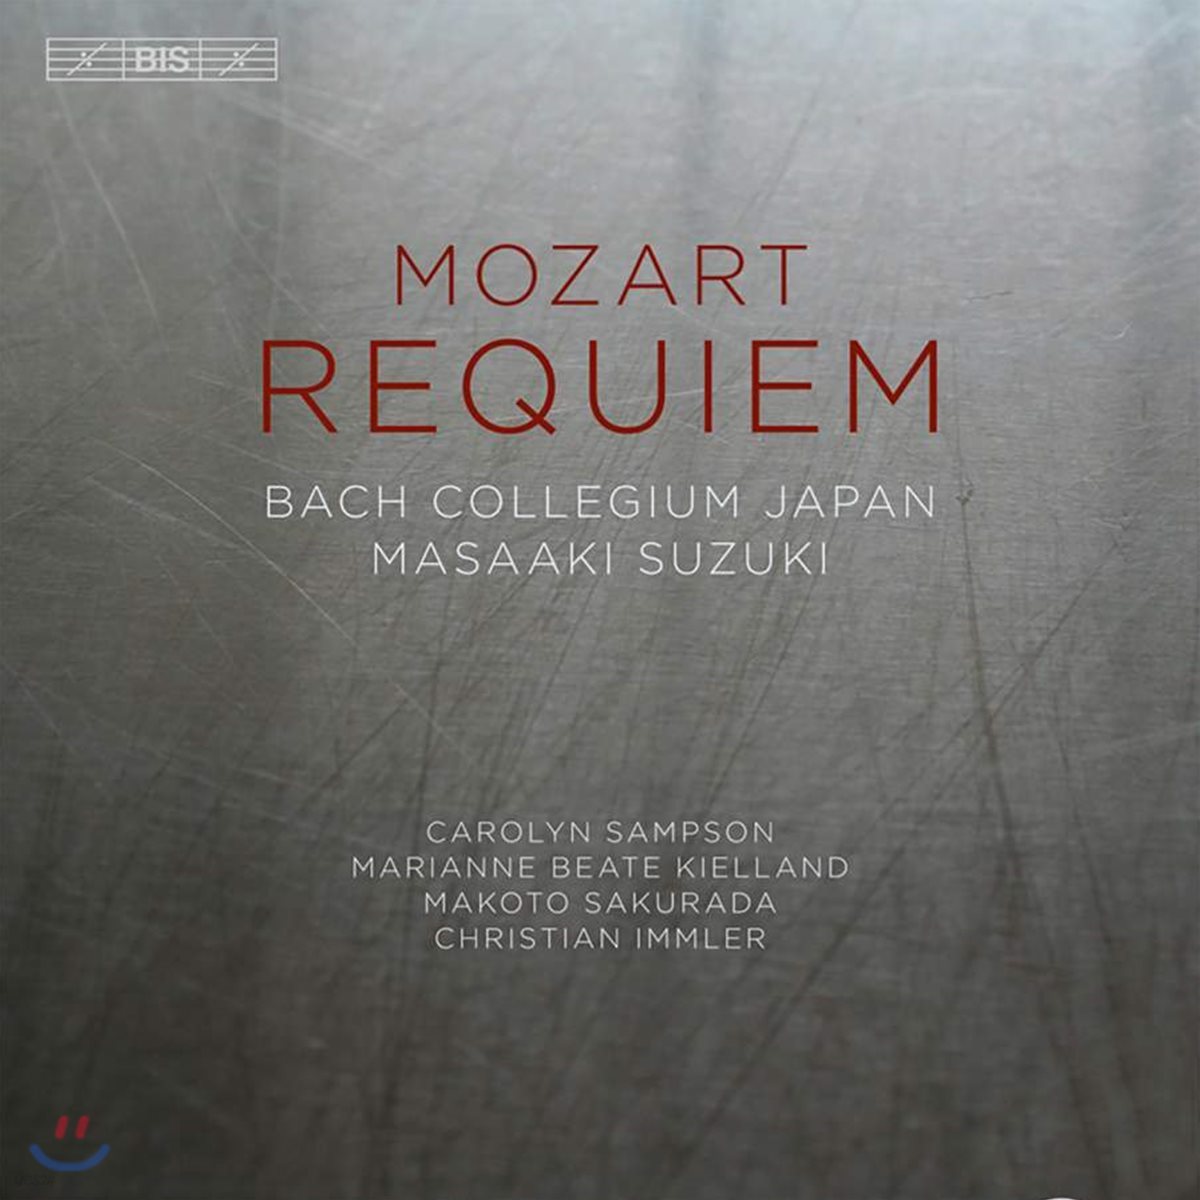 Masaaki Suzuki 모차르트: 레퀴엠, 구도자를 위한 저녁기도, 고요한 나팔 (Mozart: Requiem, Vesperae solennes de confessore)